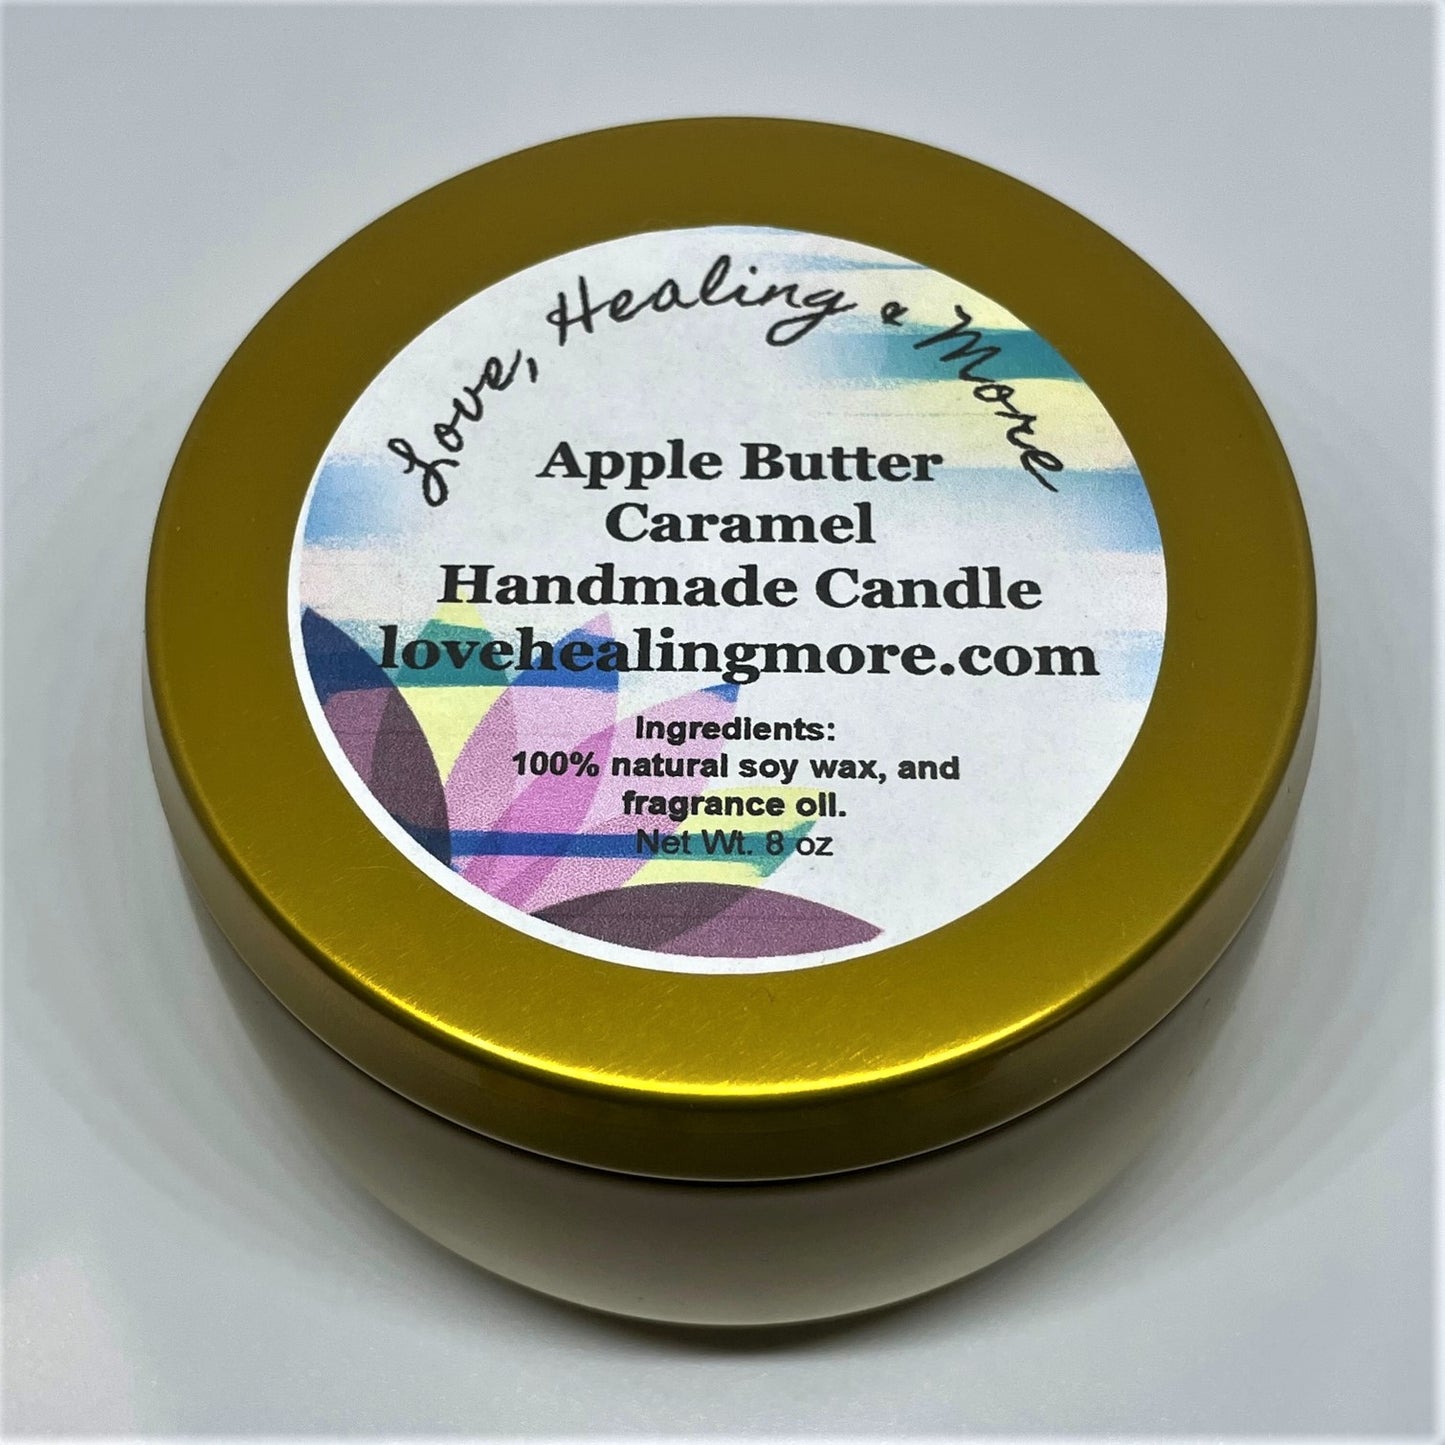 Handmade Apple Butter Caramel Fragrance Candle